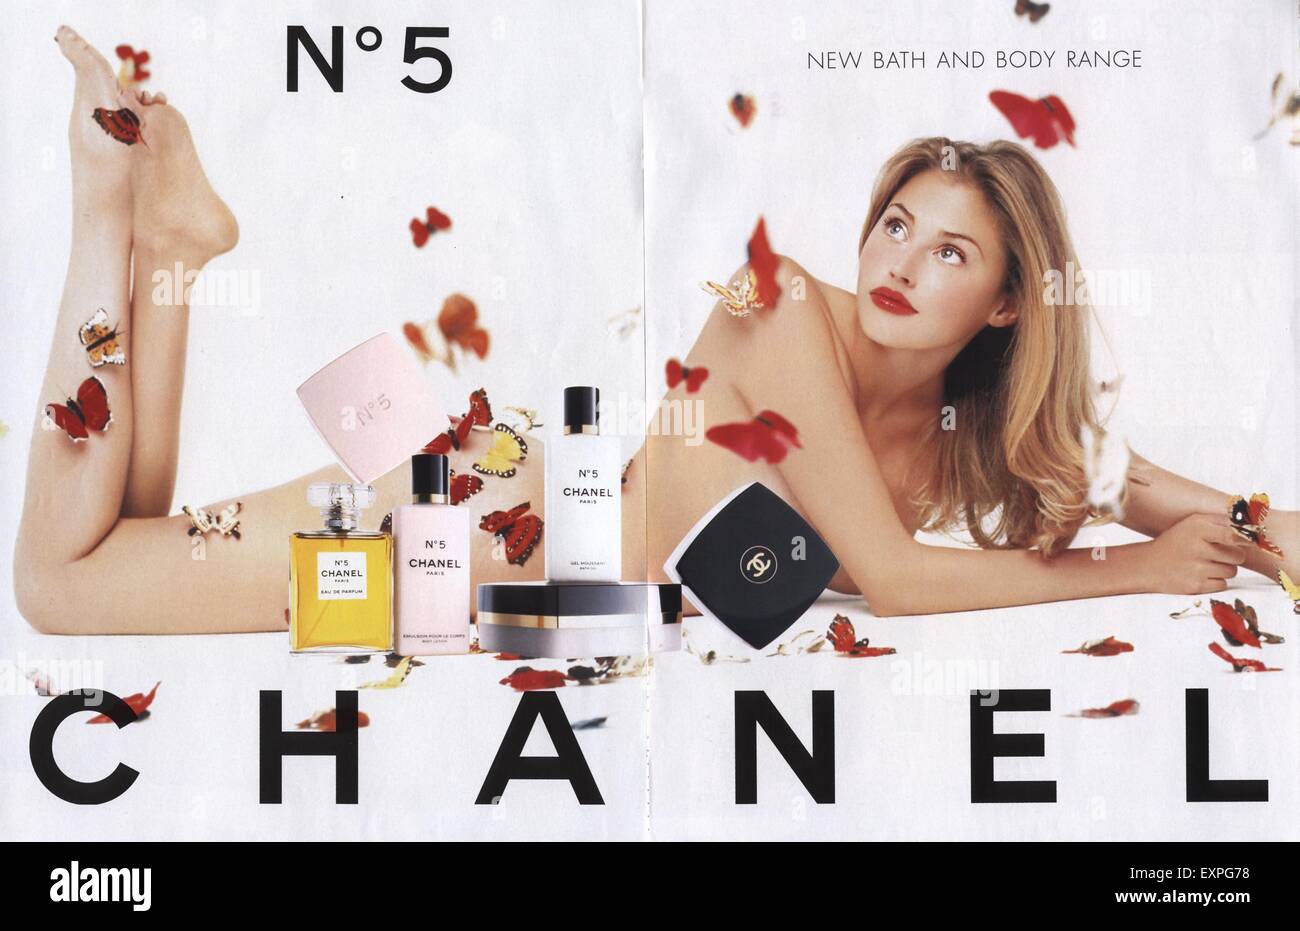 2000s UK Chanel Magazine Advert Stock Photo